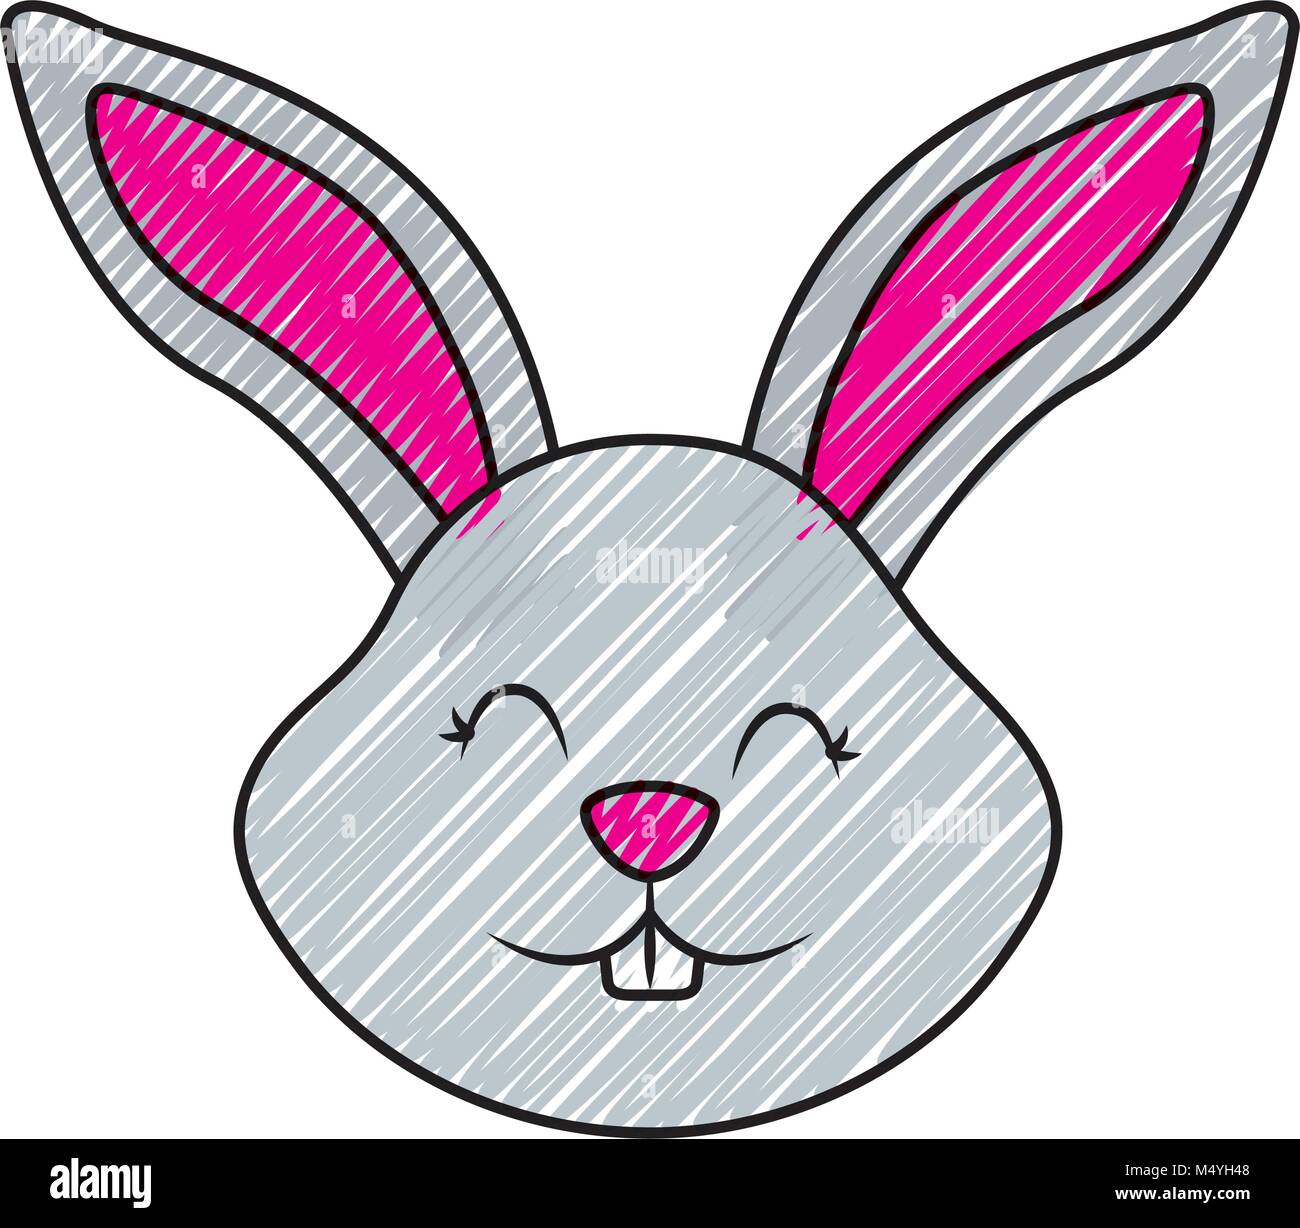 funny cute head rabbit ears animal cartoon Stock Vector